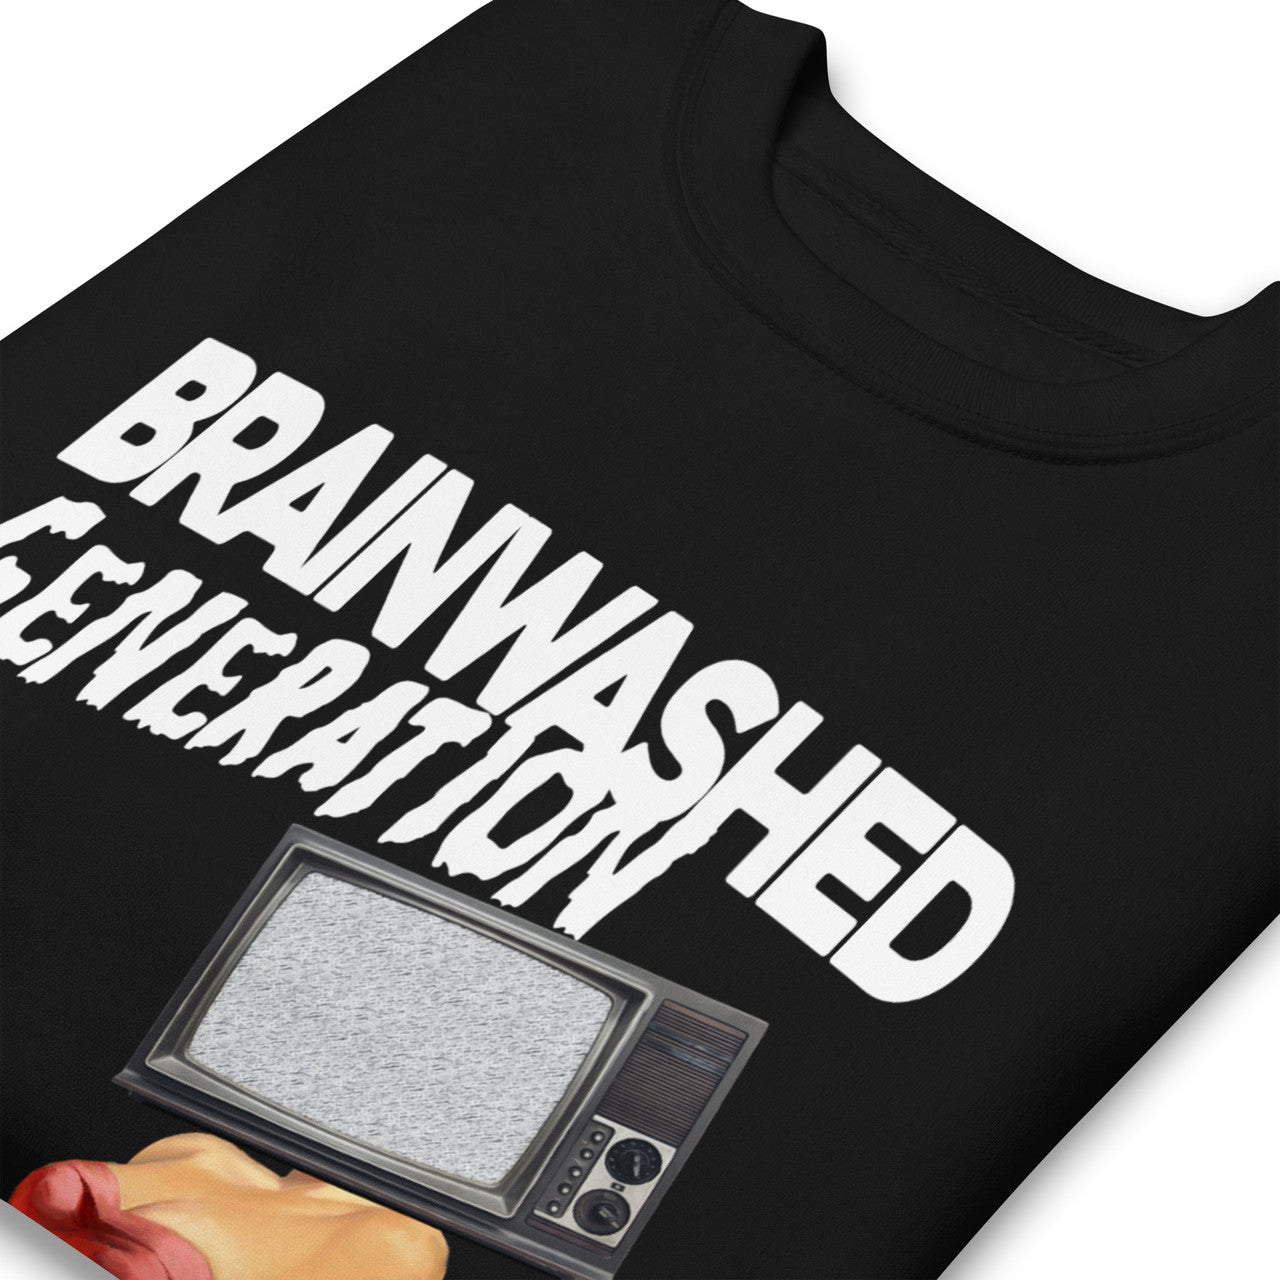 Brainwashed Generation KiSS Unisex Premium Sweatshirt - Retro Pin Up - Technology